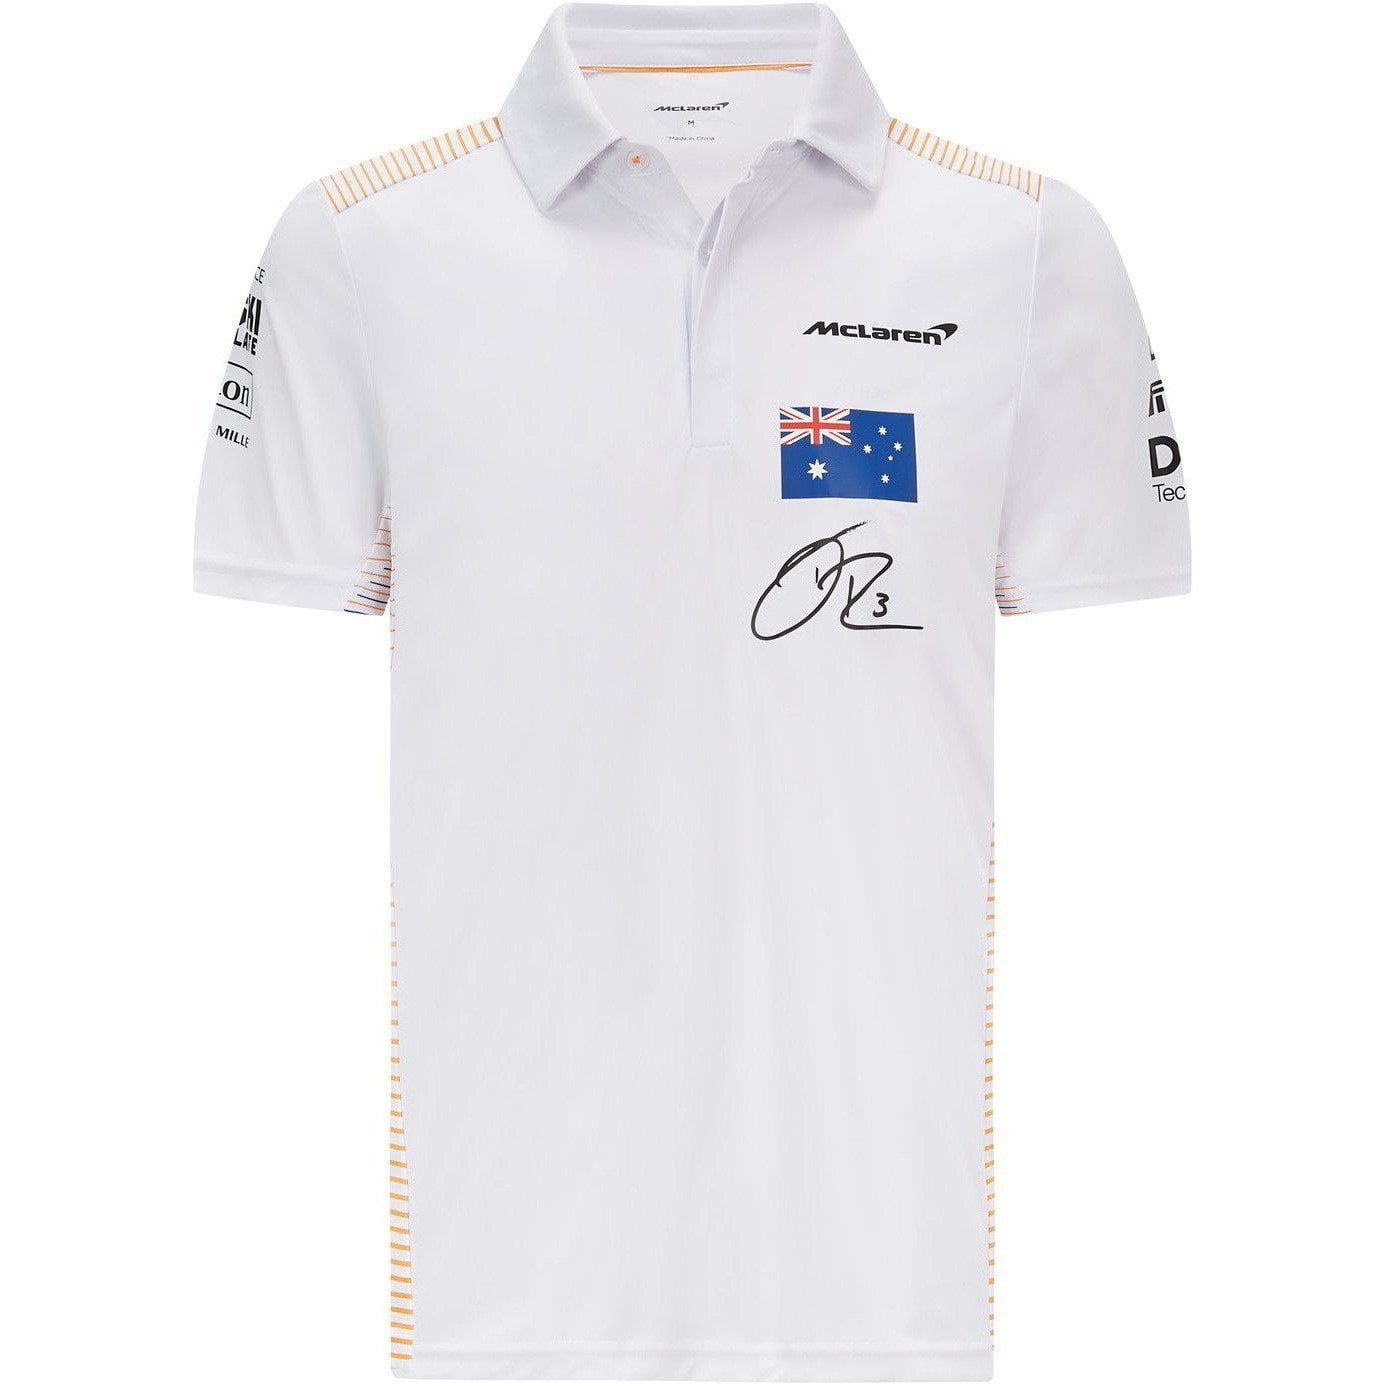 2021 Mclaren FW Gulf Racing Colour Block Mens Polo Shirt Official Merchandise 